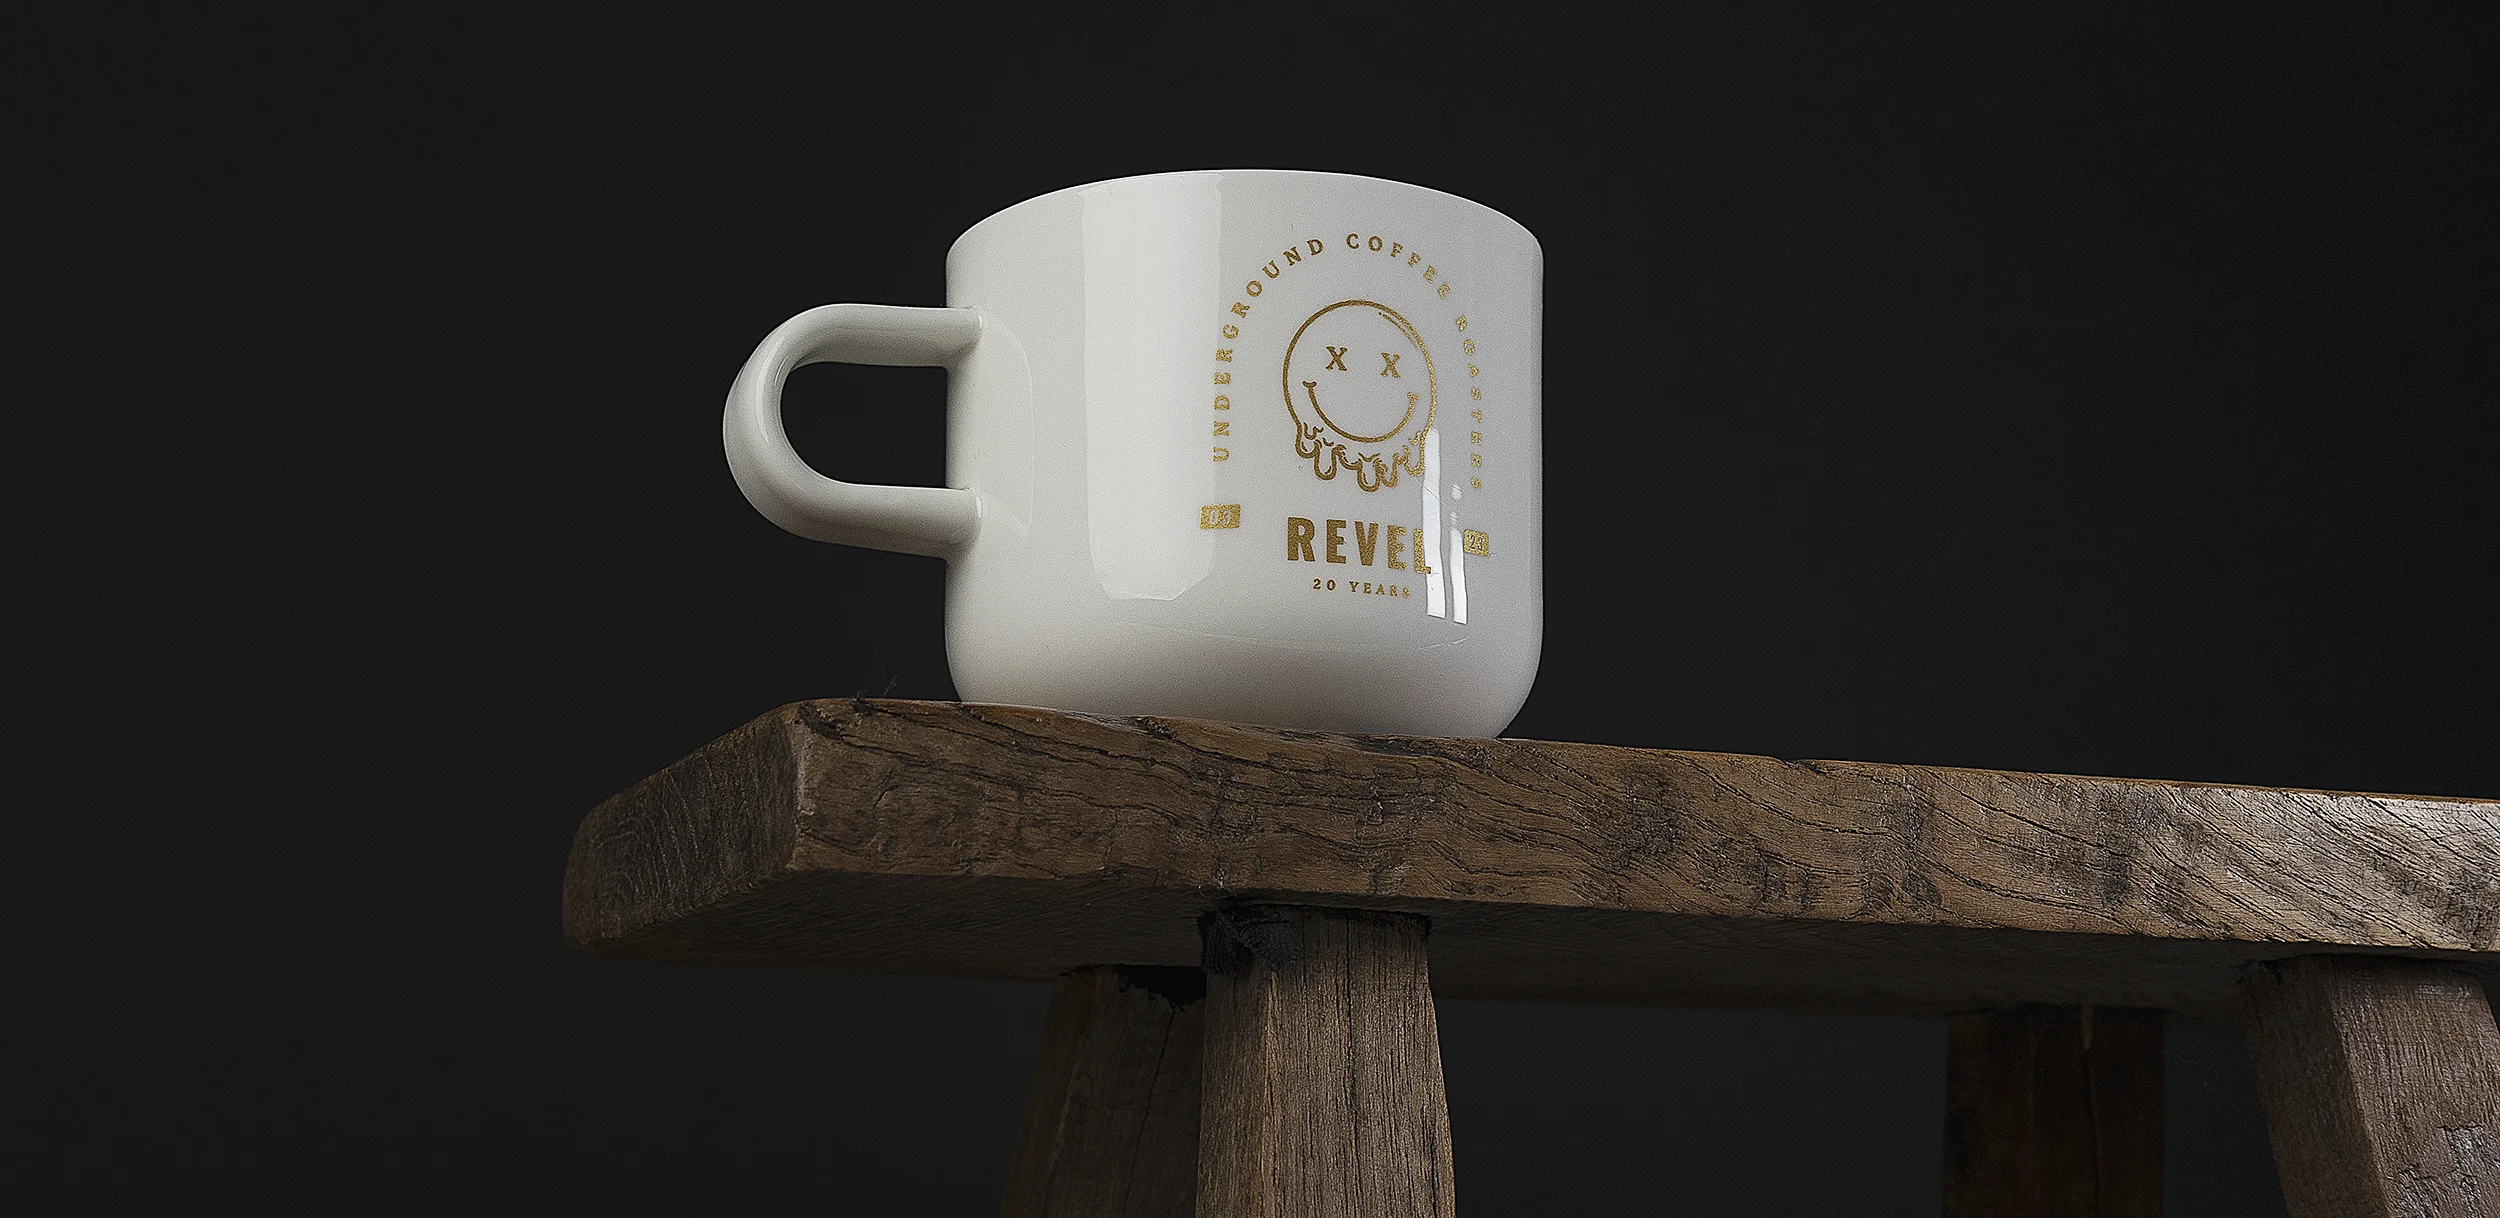 Revel XX mug by Underground Coffee Roasters